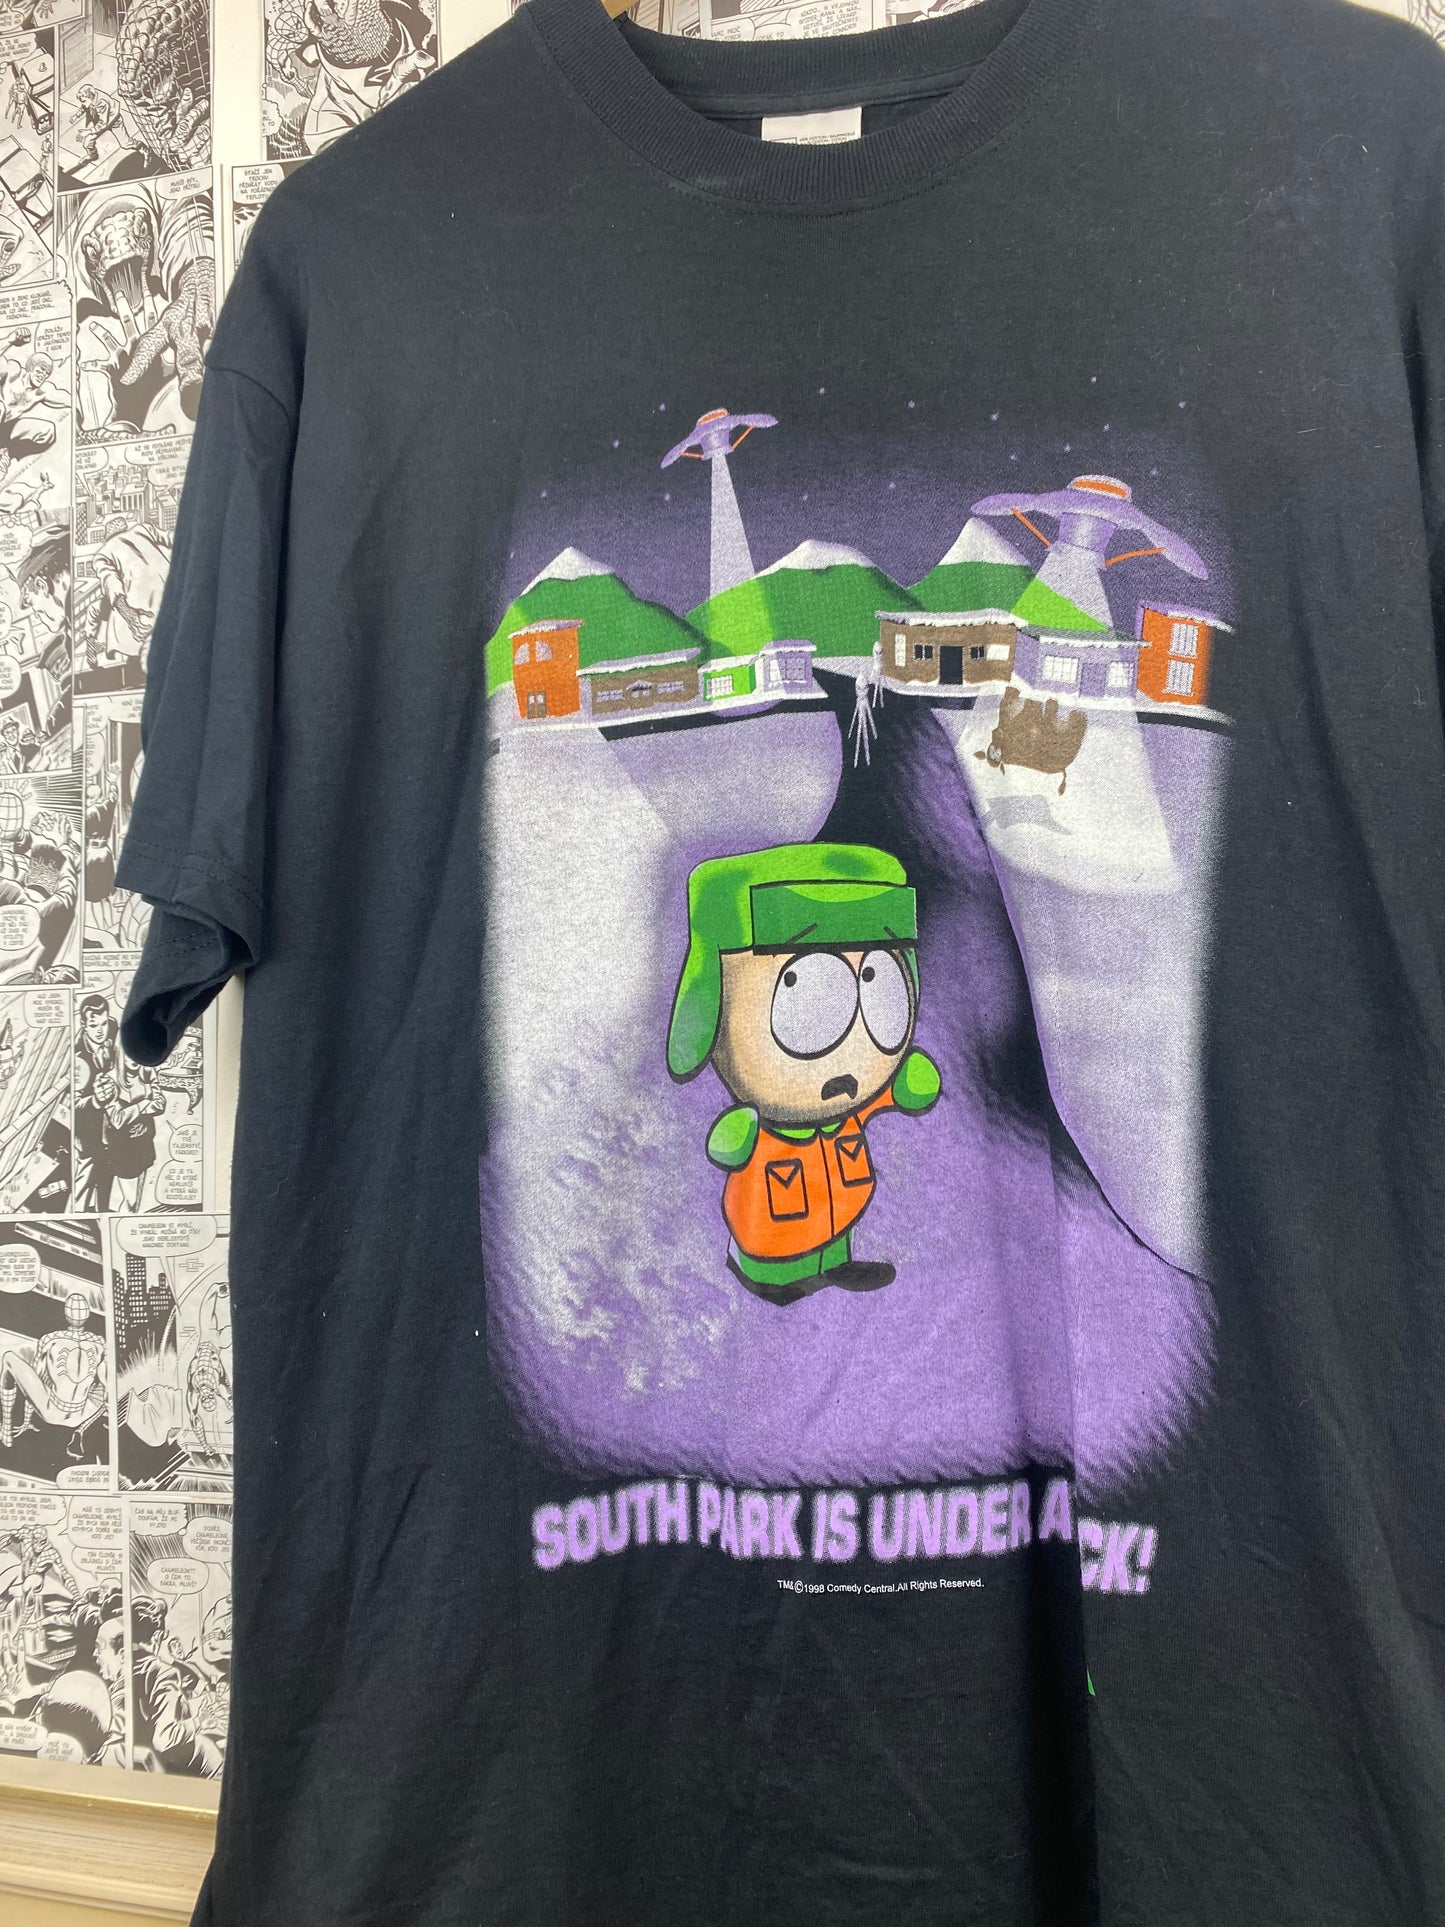 Vintage South Park “Under attack” 1998 t-shirt - size L